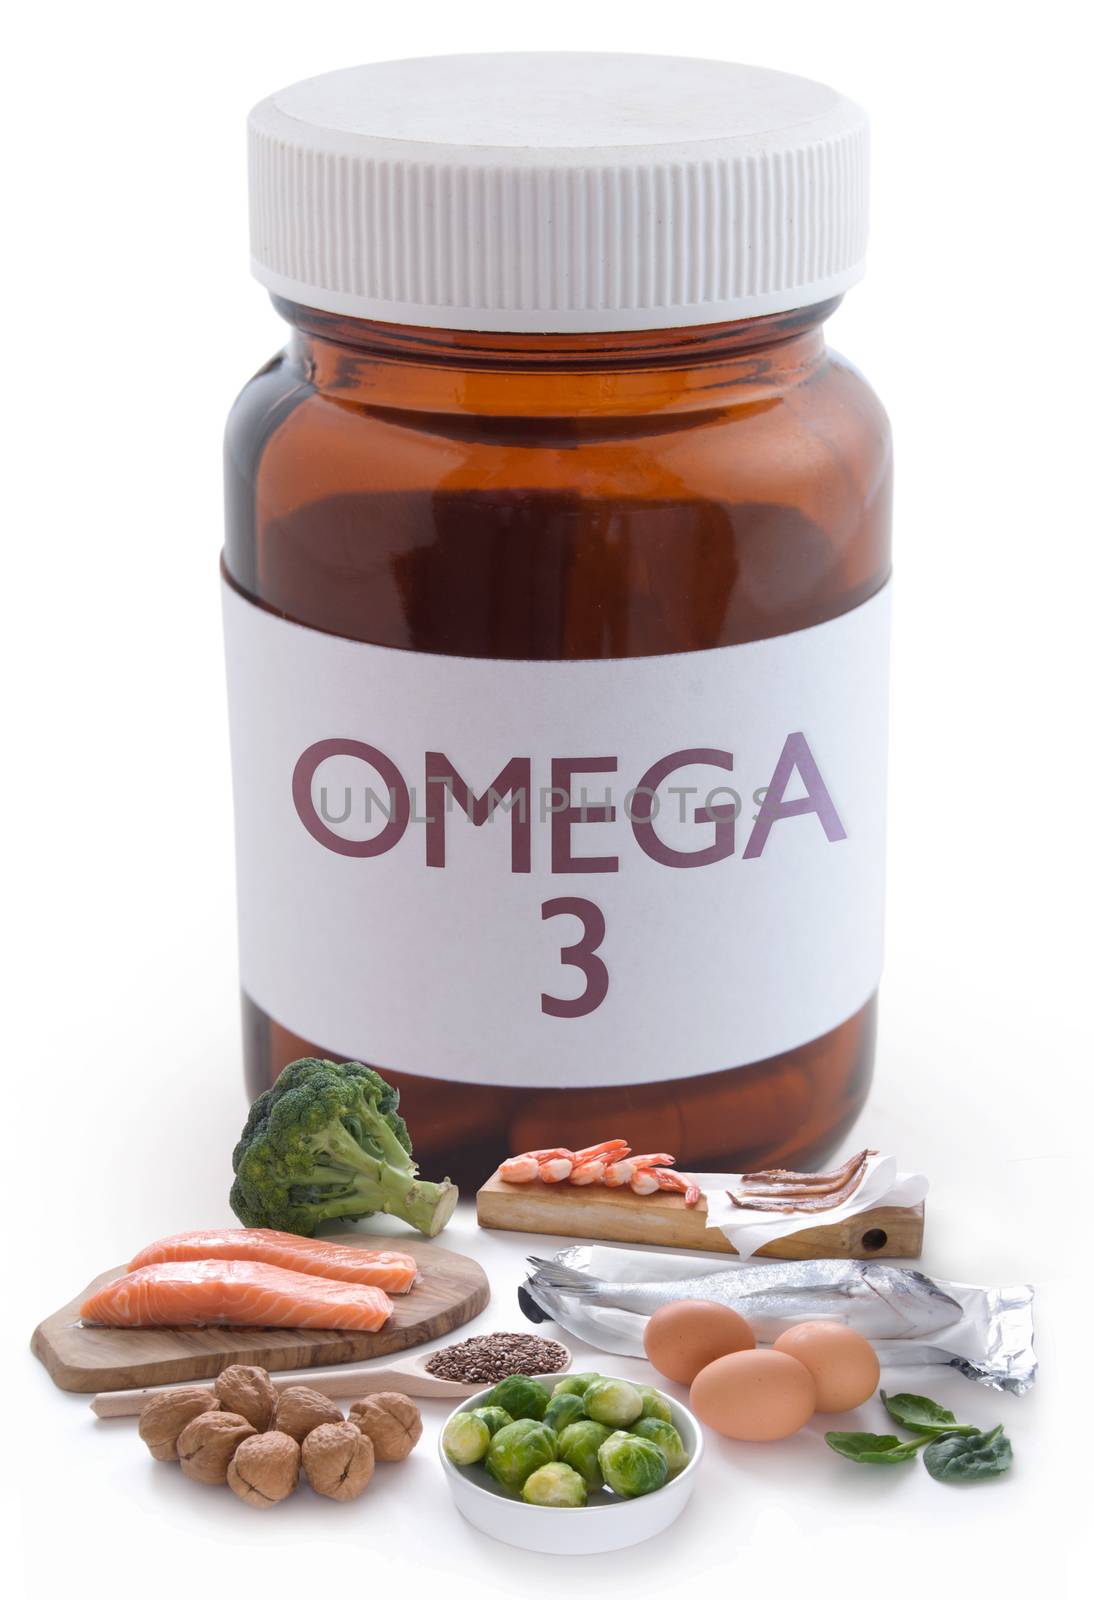 Omega 3 pills concept by unikpix